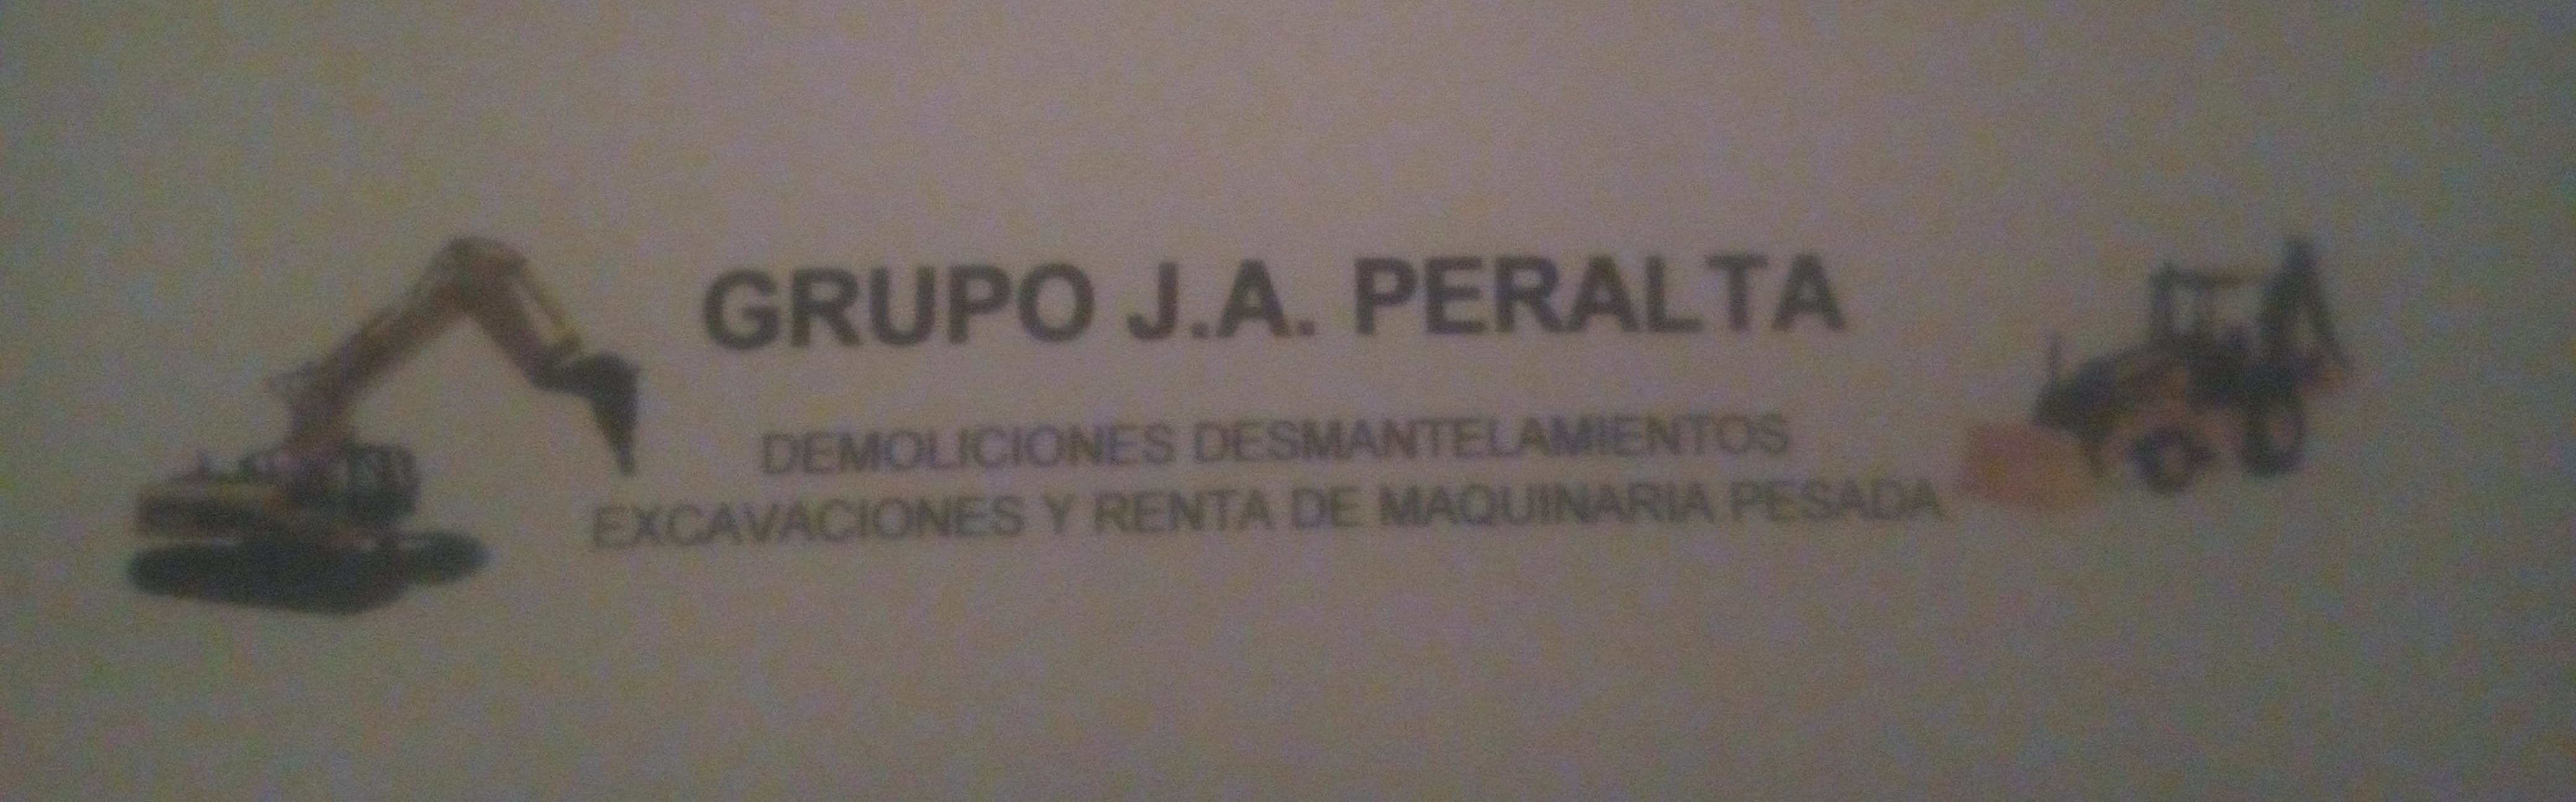 Grupo Jf Peralta